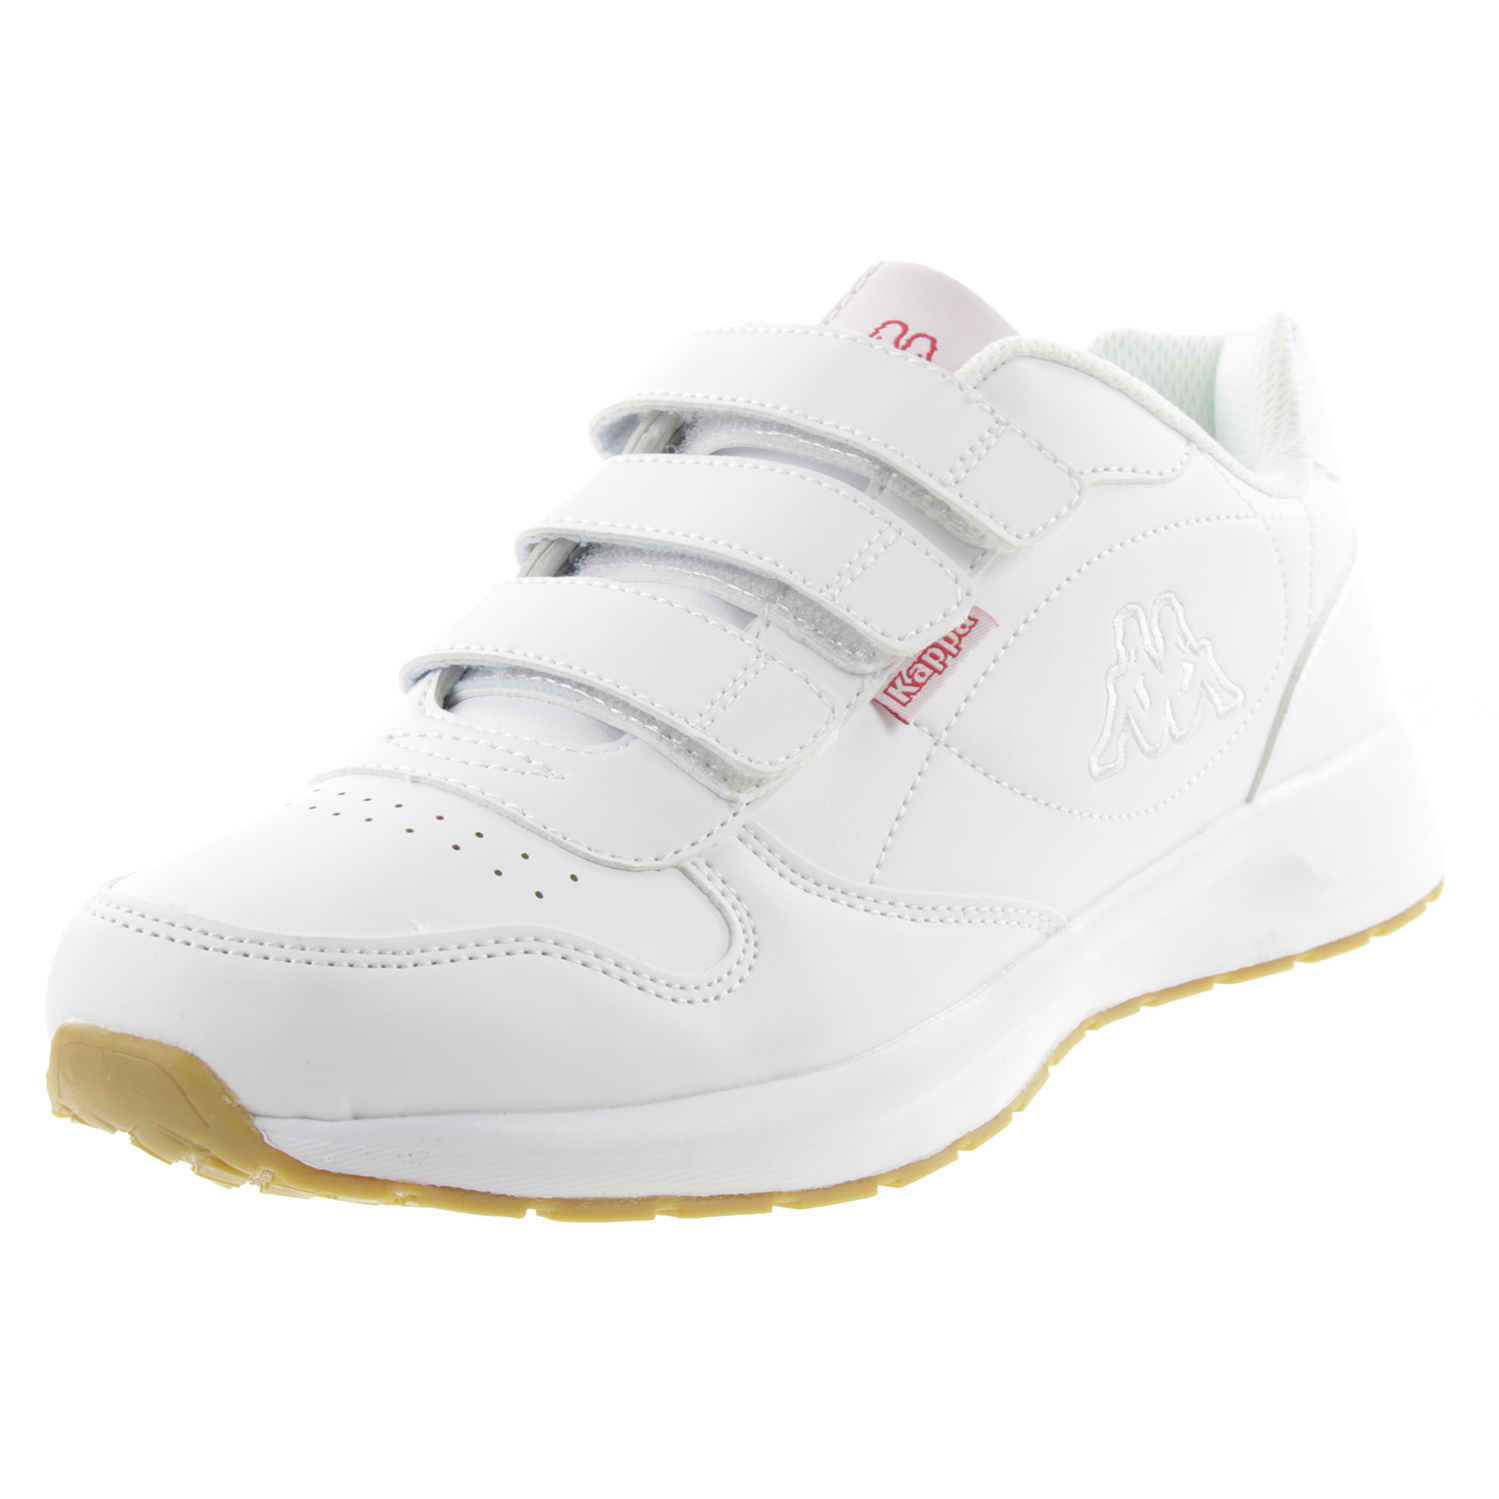 Kappa Unisex-Erwachsene Base VL Sneaker, Weiß (White 1010), 42 EU